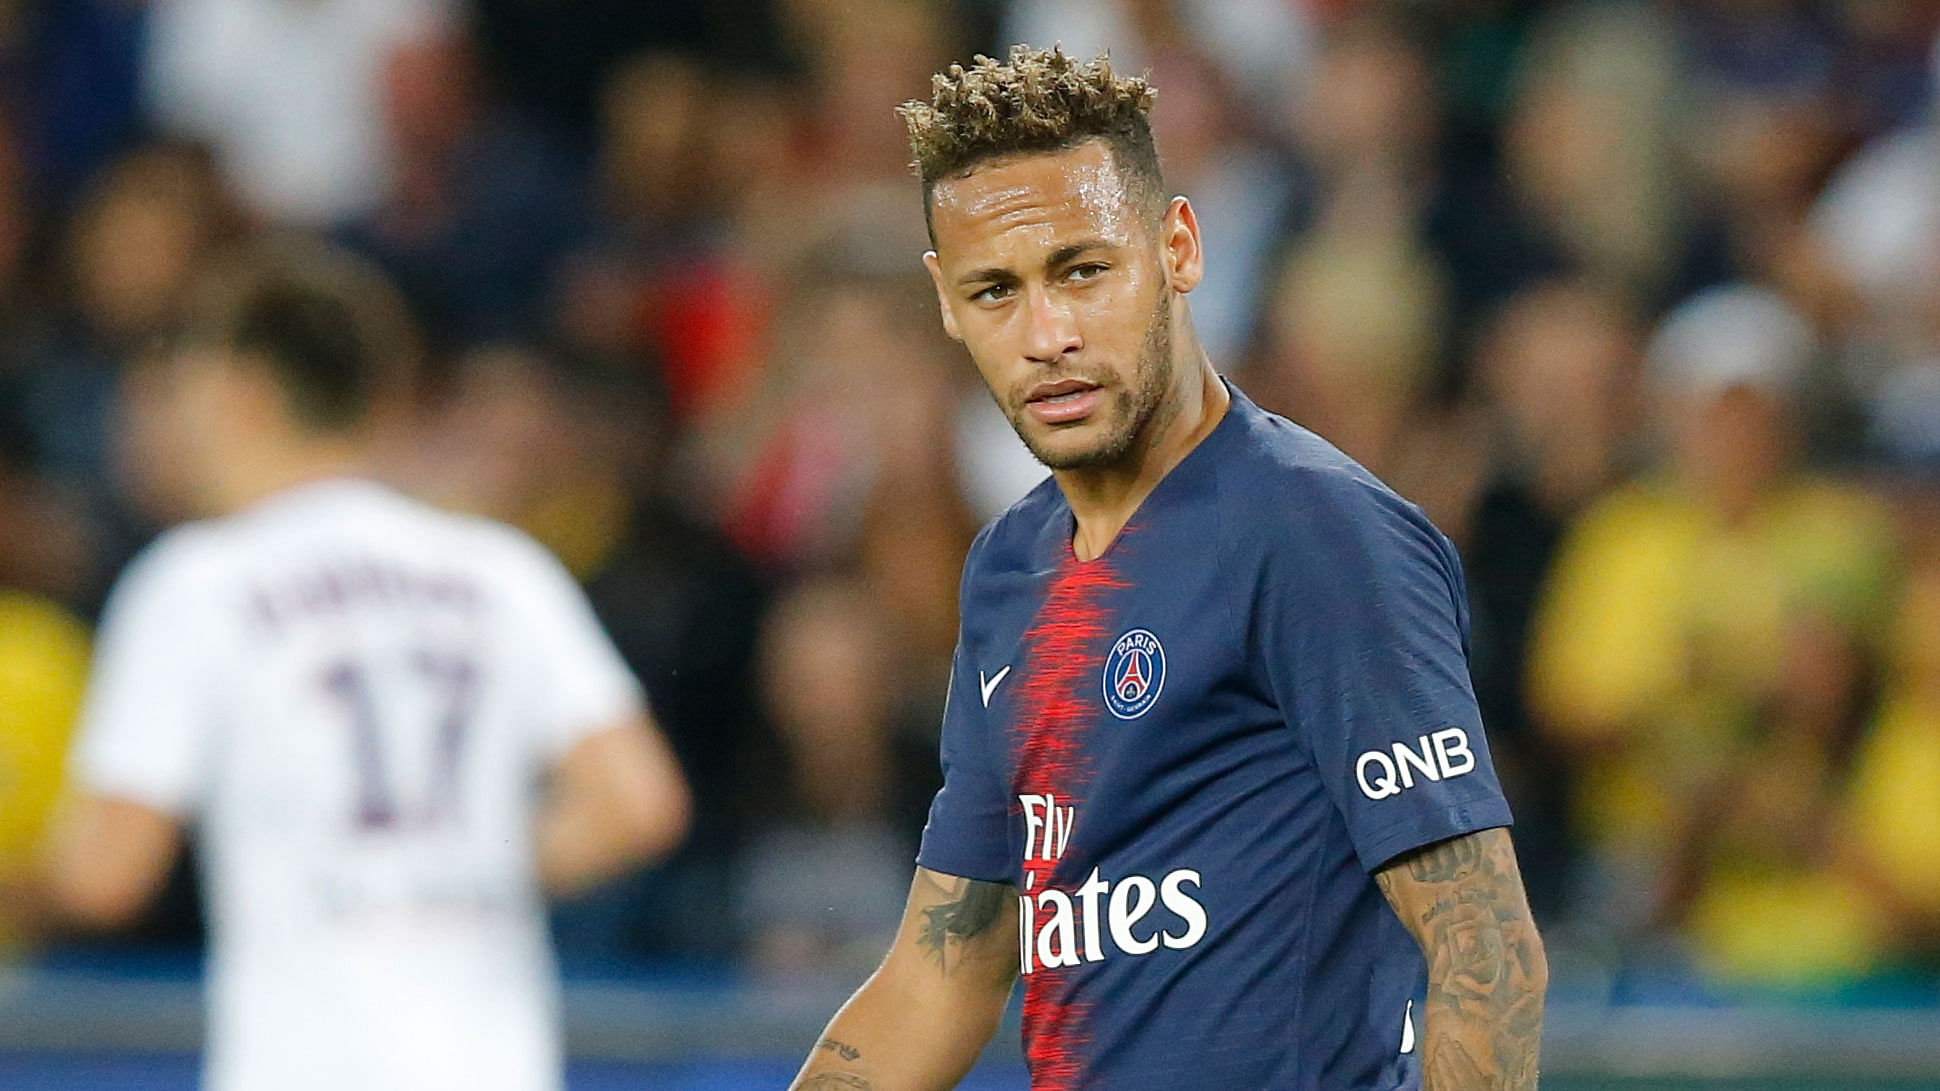 Neymar took just 10 minutes to score defending champion Paris Saint-Germain’s first goal of the season.